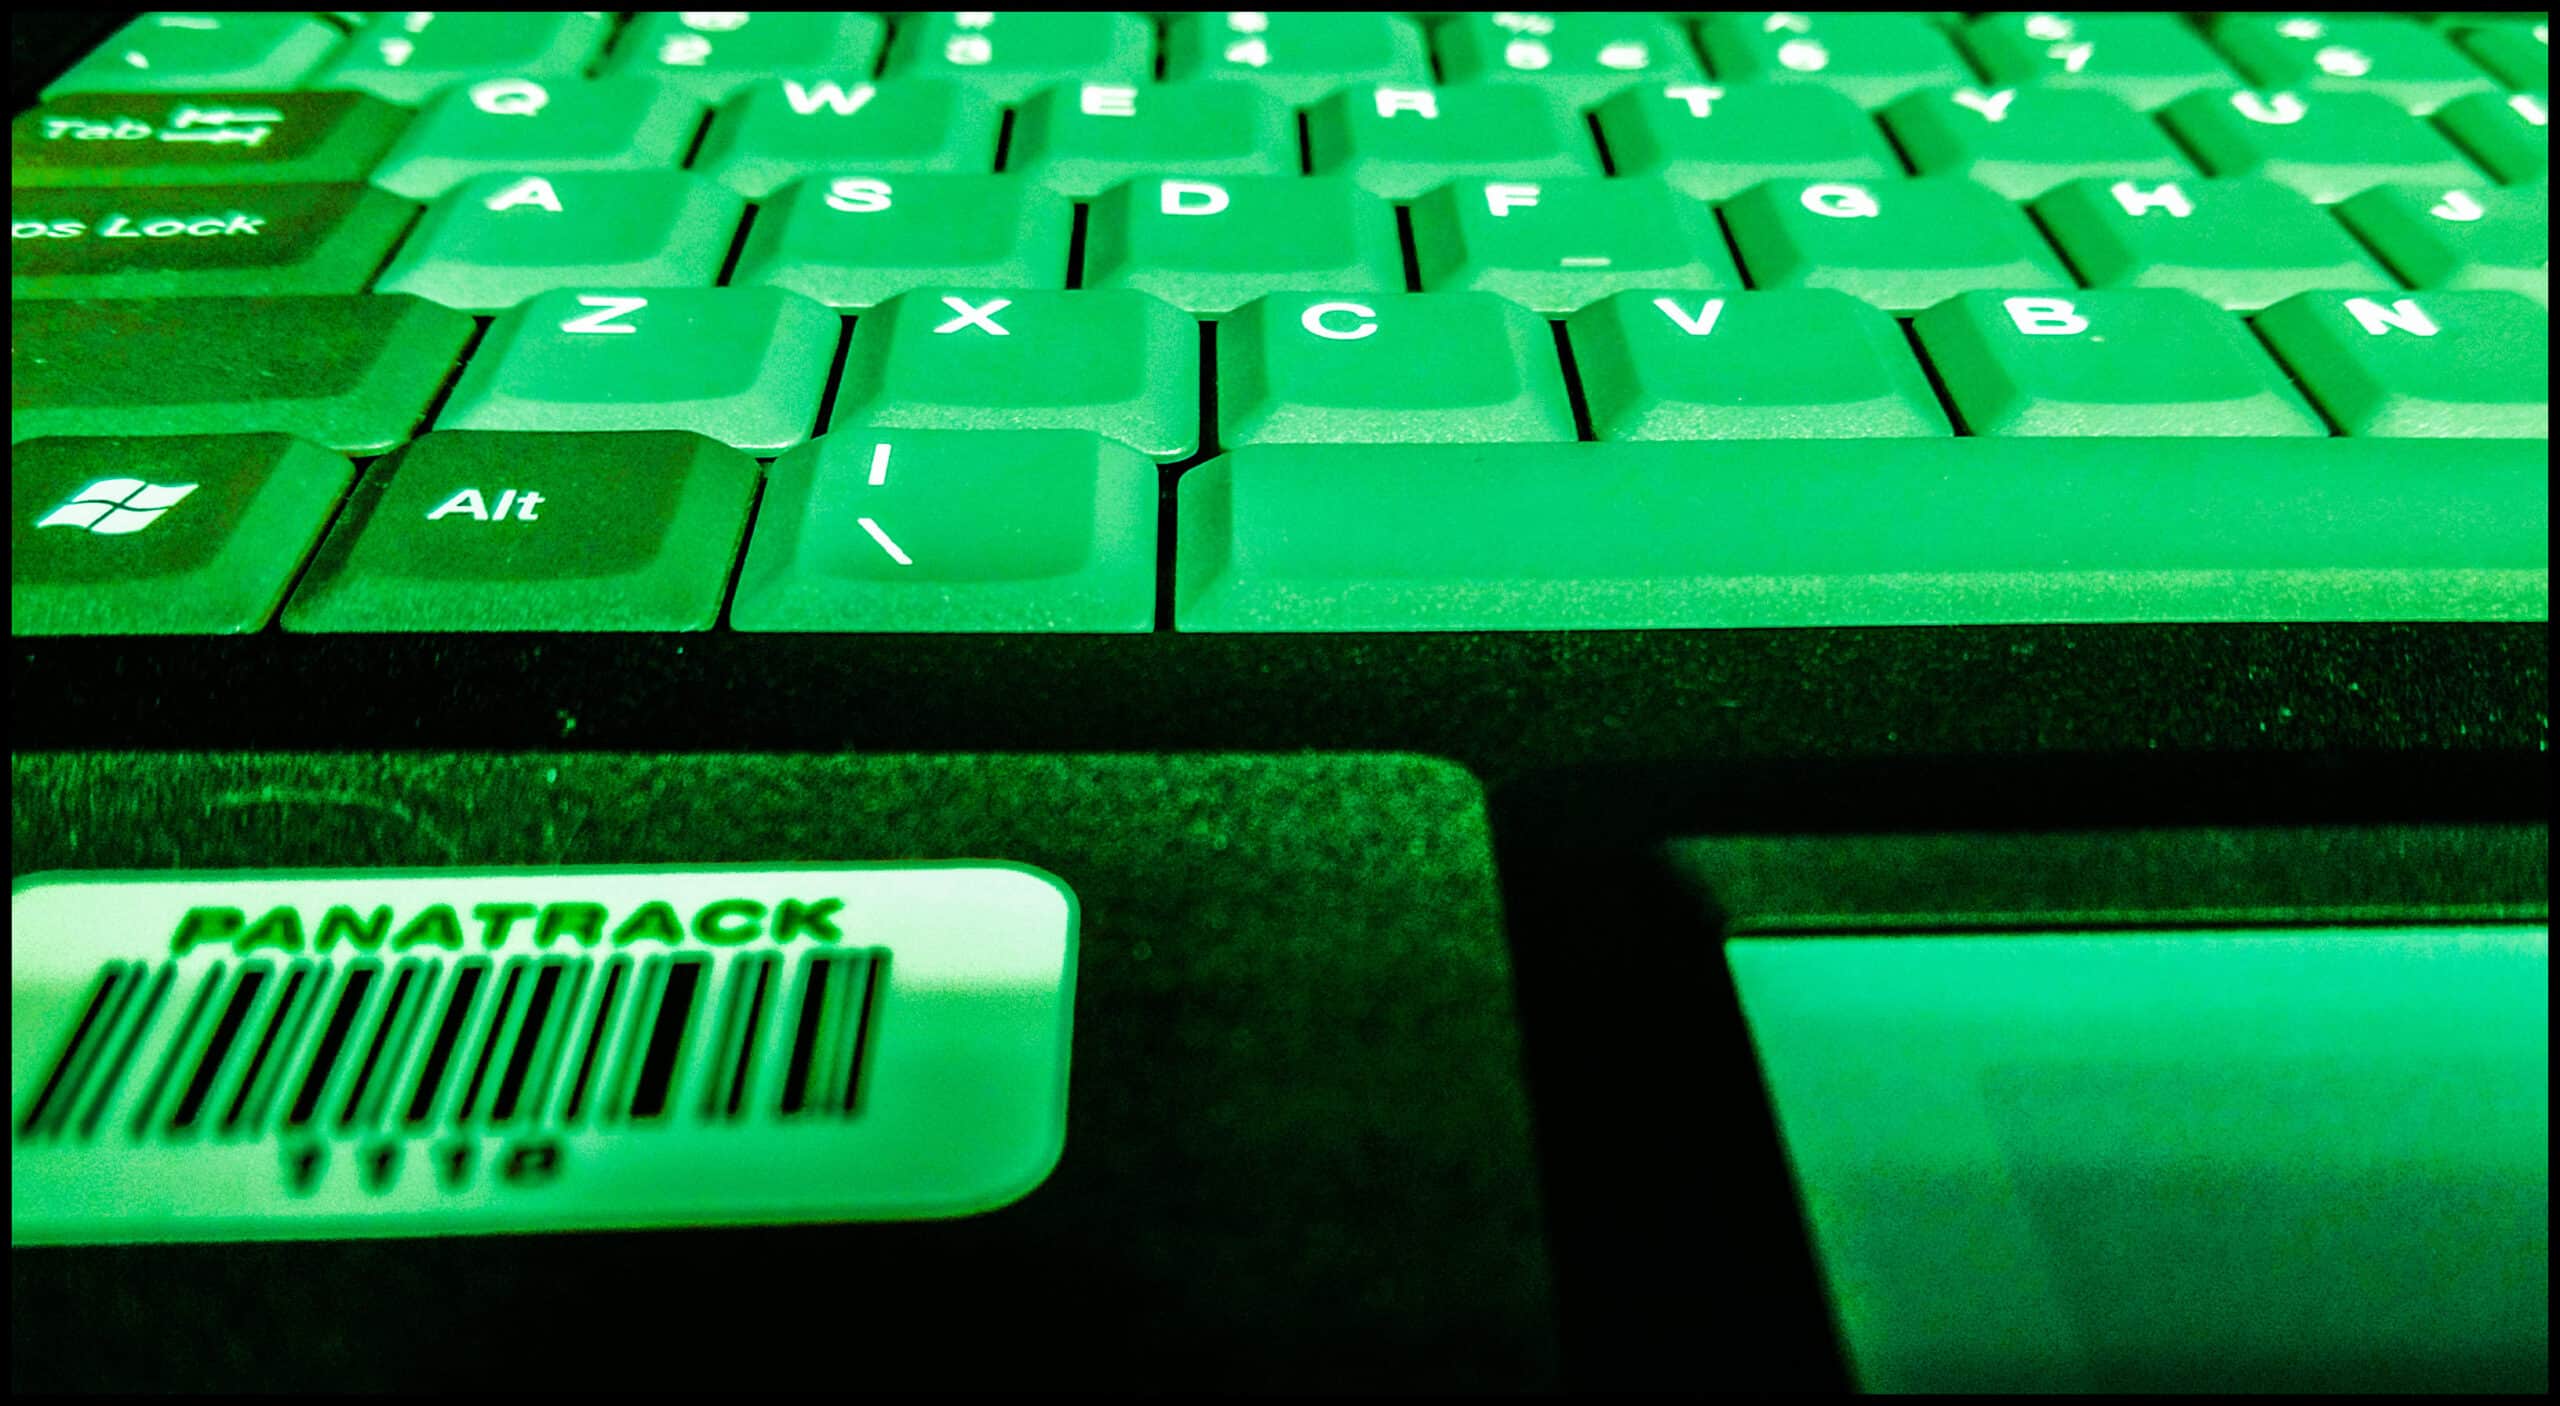 Green Panatrack keyboard with barcode